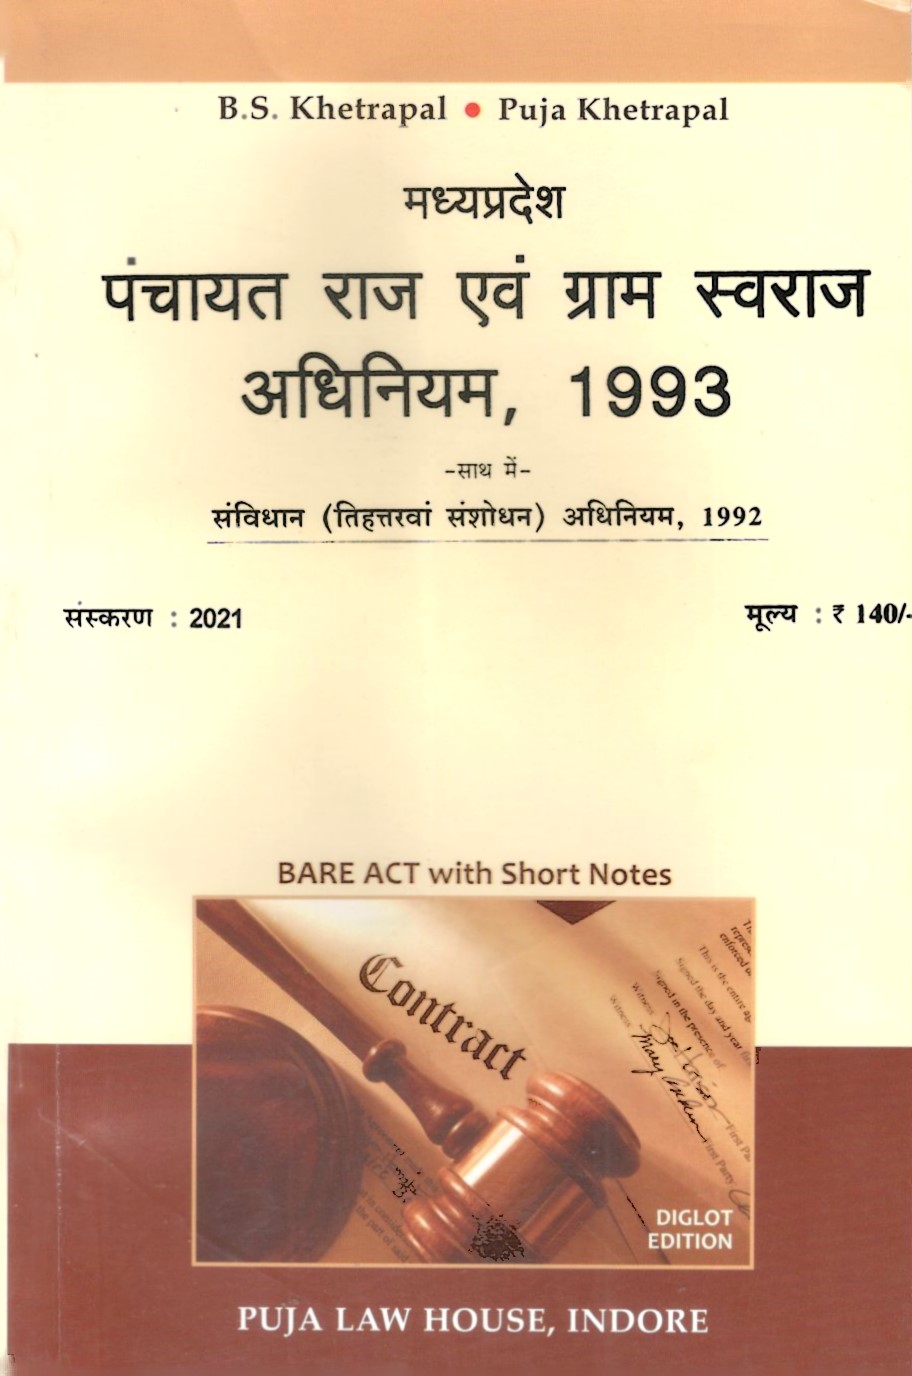 मध्य प्रदेश पंचायत राज एवं ग्राम स्वराज अधिनियम, 1993 / M.P. Panchayat Raj Avam Gram Swaraj Adhiniyam, 1993